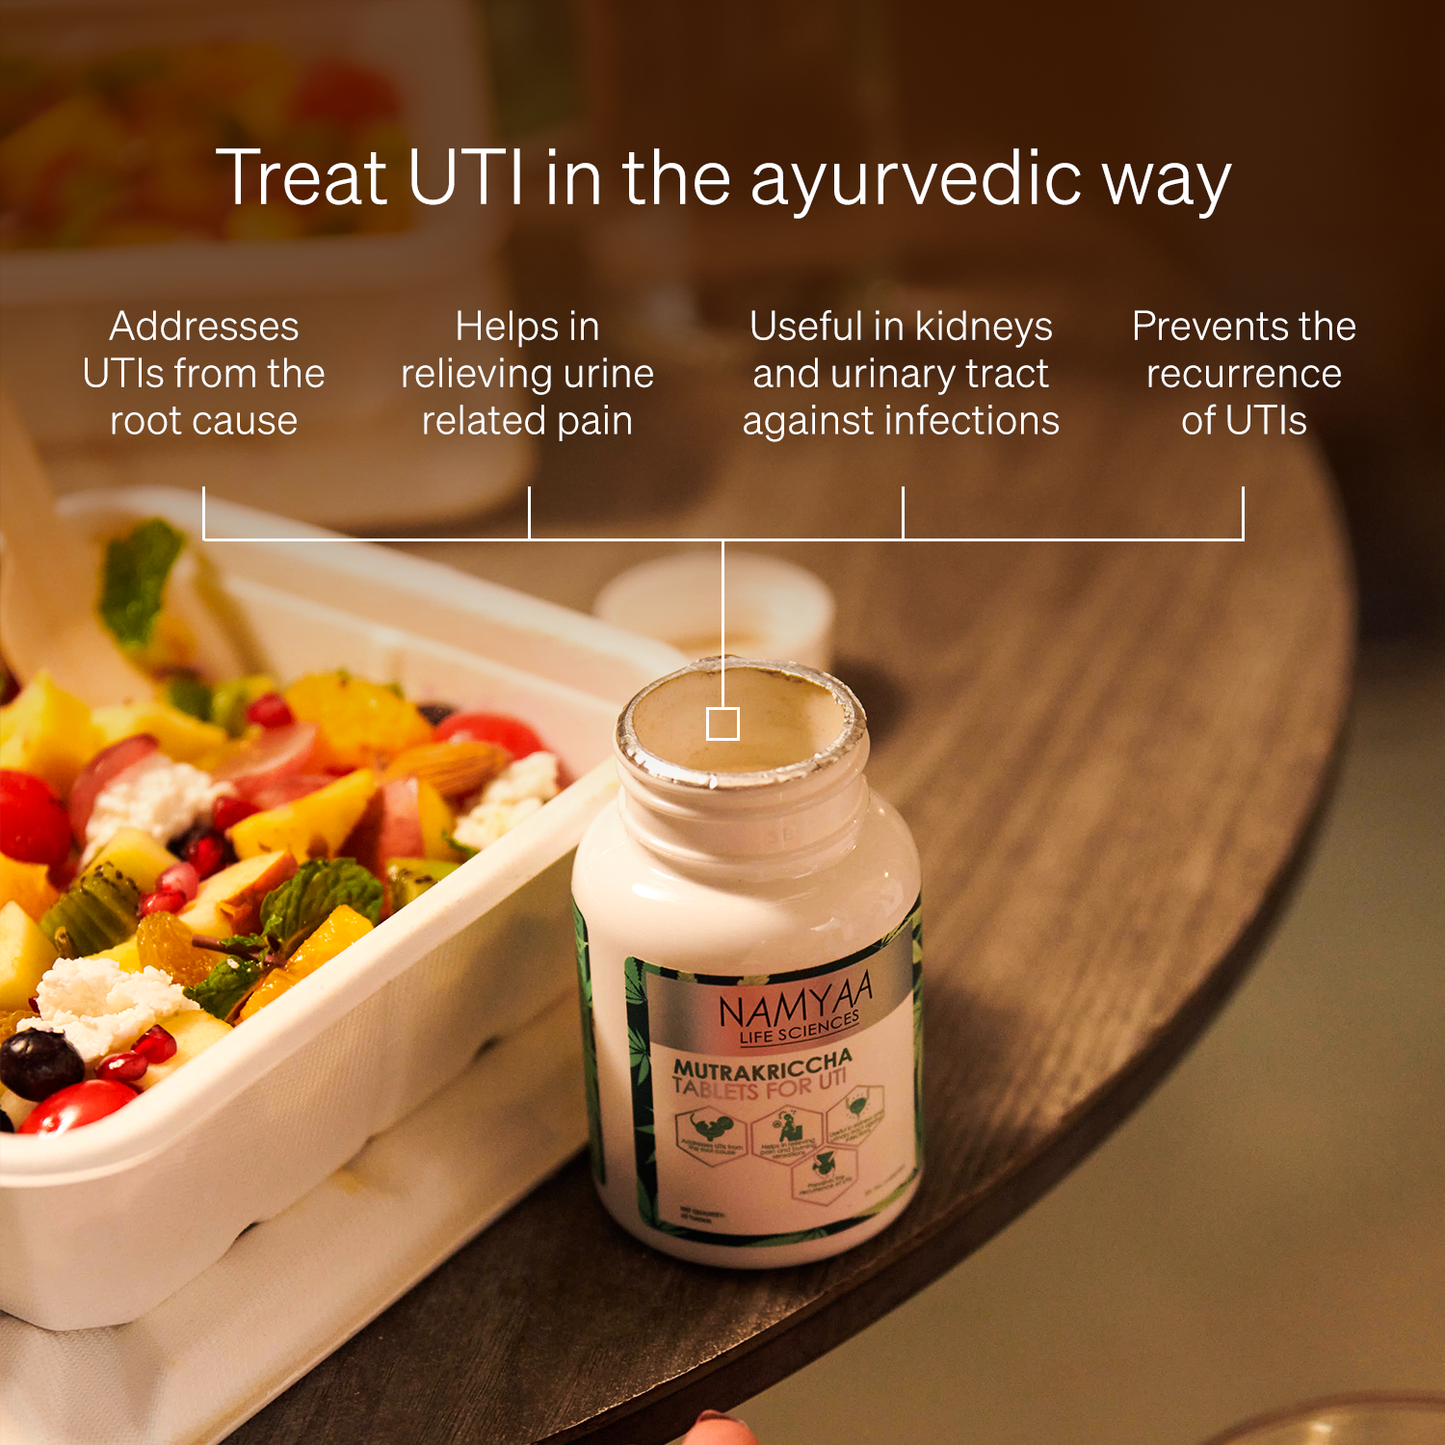 Namyaa Mutrakriccha Tablets for UTI